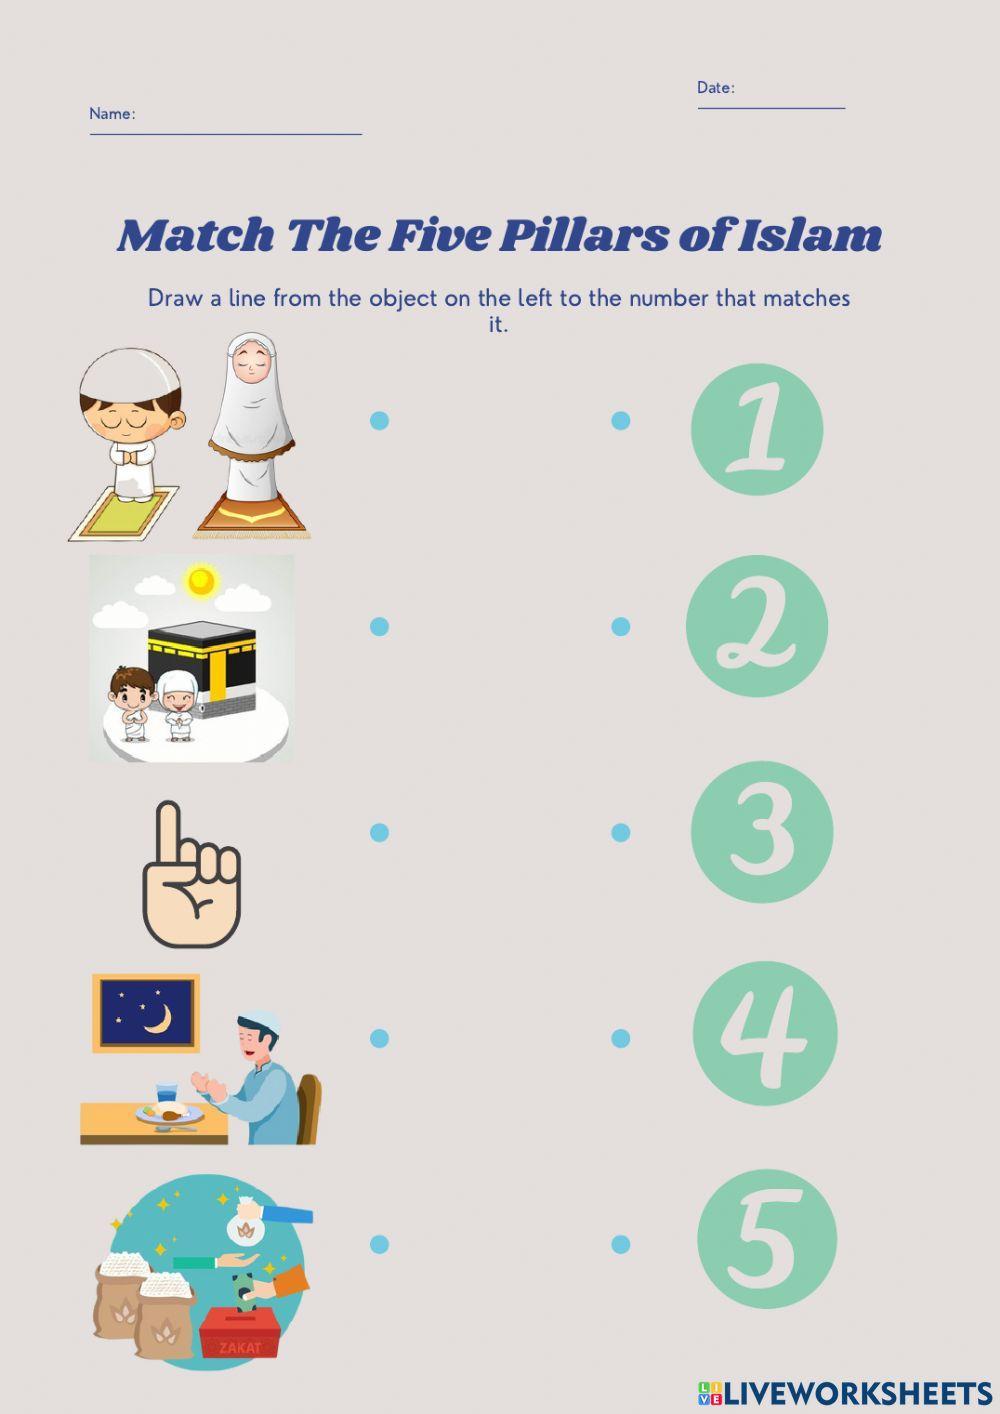 The five pillars of Islam (5 rukun islam)